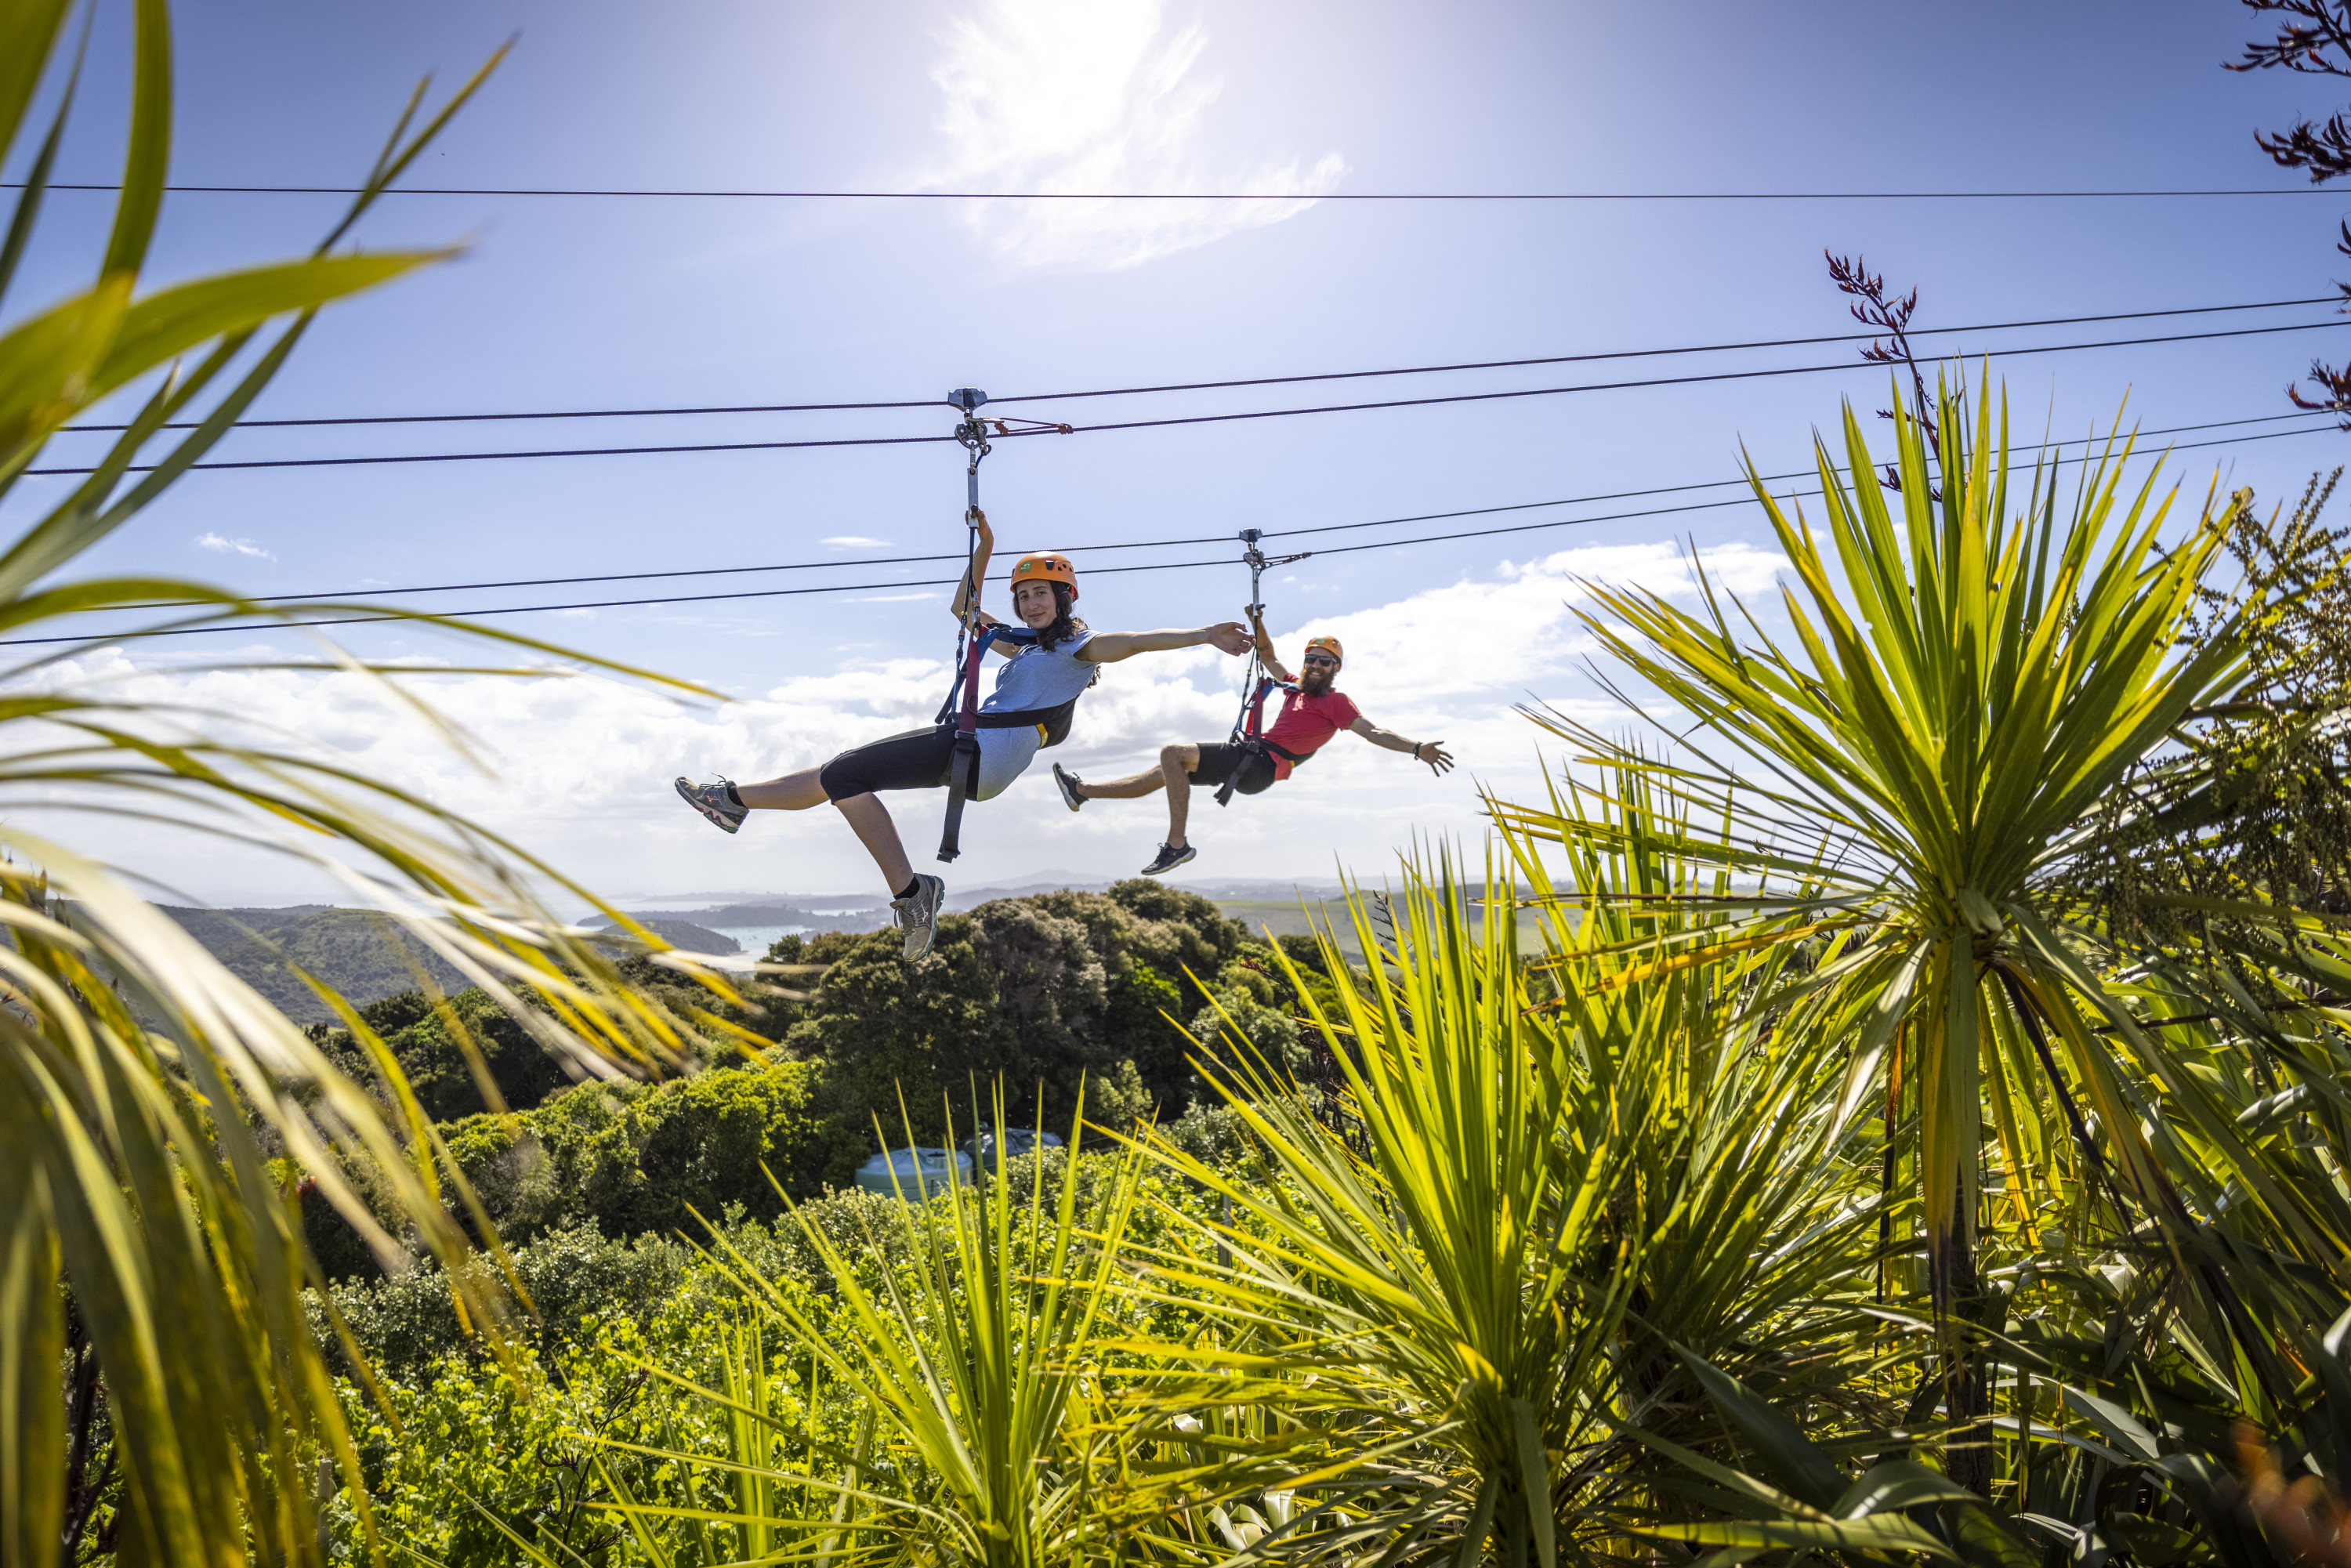 Friends swing on a zipline through the treetops at EcoZip on Waiheke 